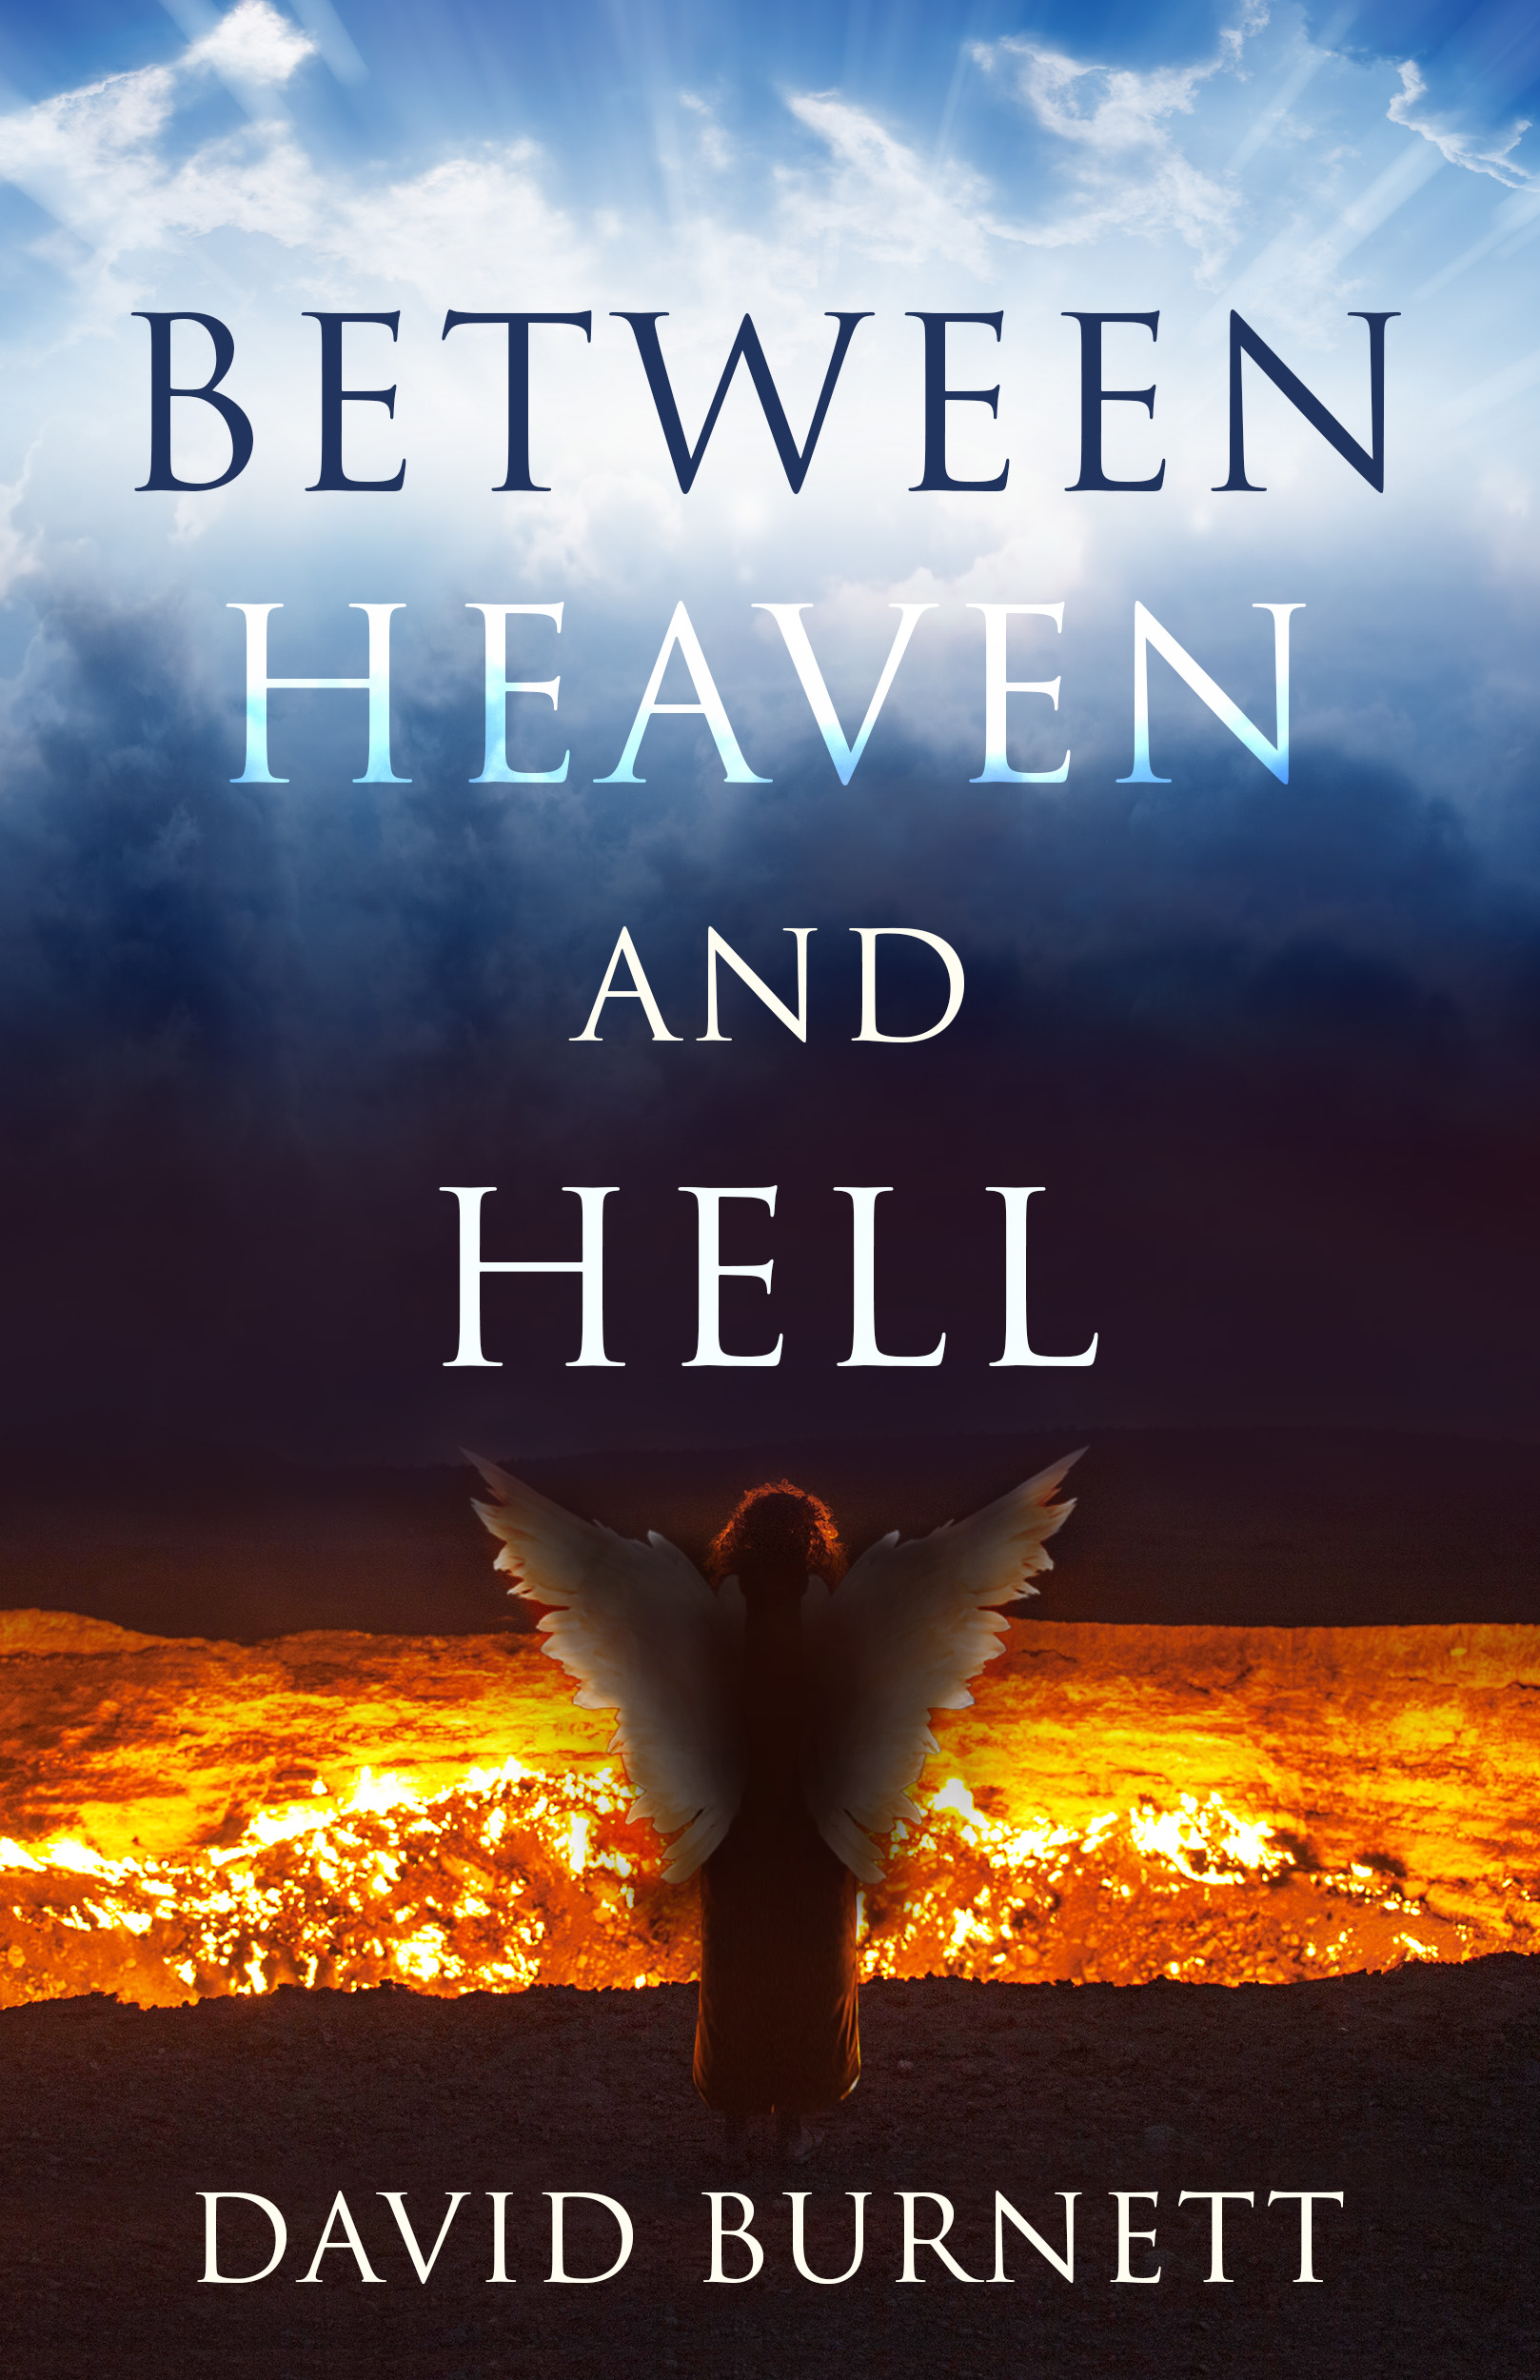 Between Heaven and Hell by David Burnett